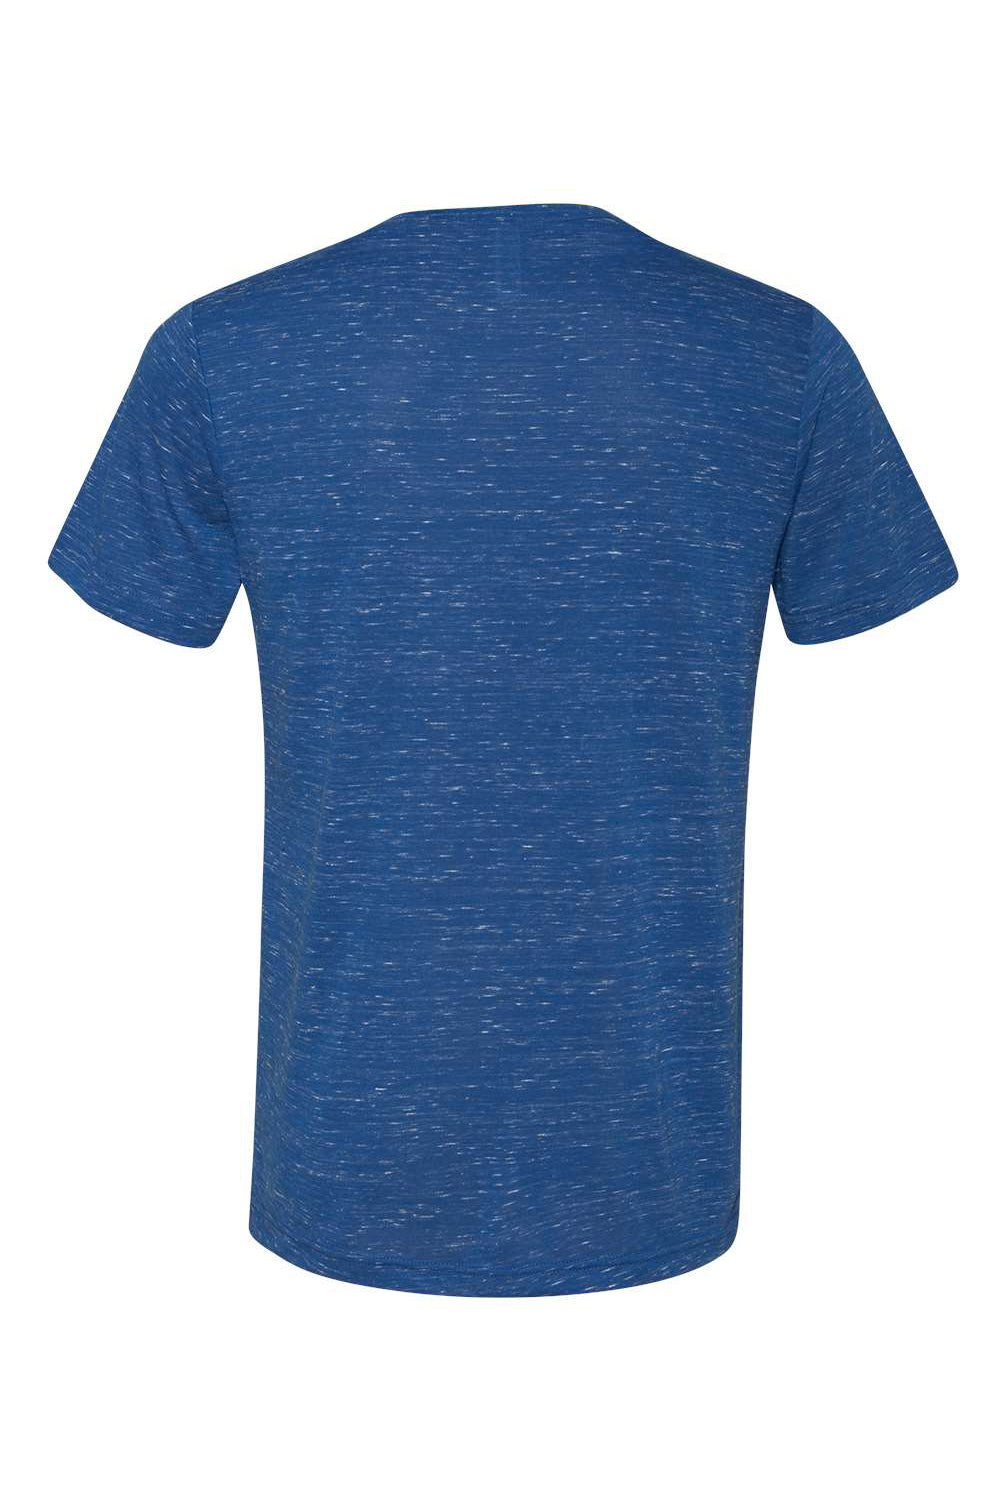 Bella + Canvas BC3005/3005/3655C Mens Jersey Short Sleeve V-Neck T-Shirt True Royal Blue Marble Flat Back